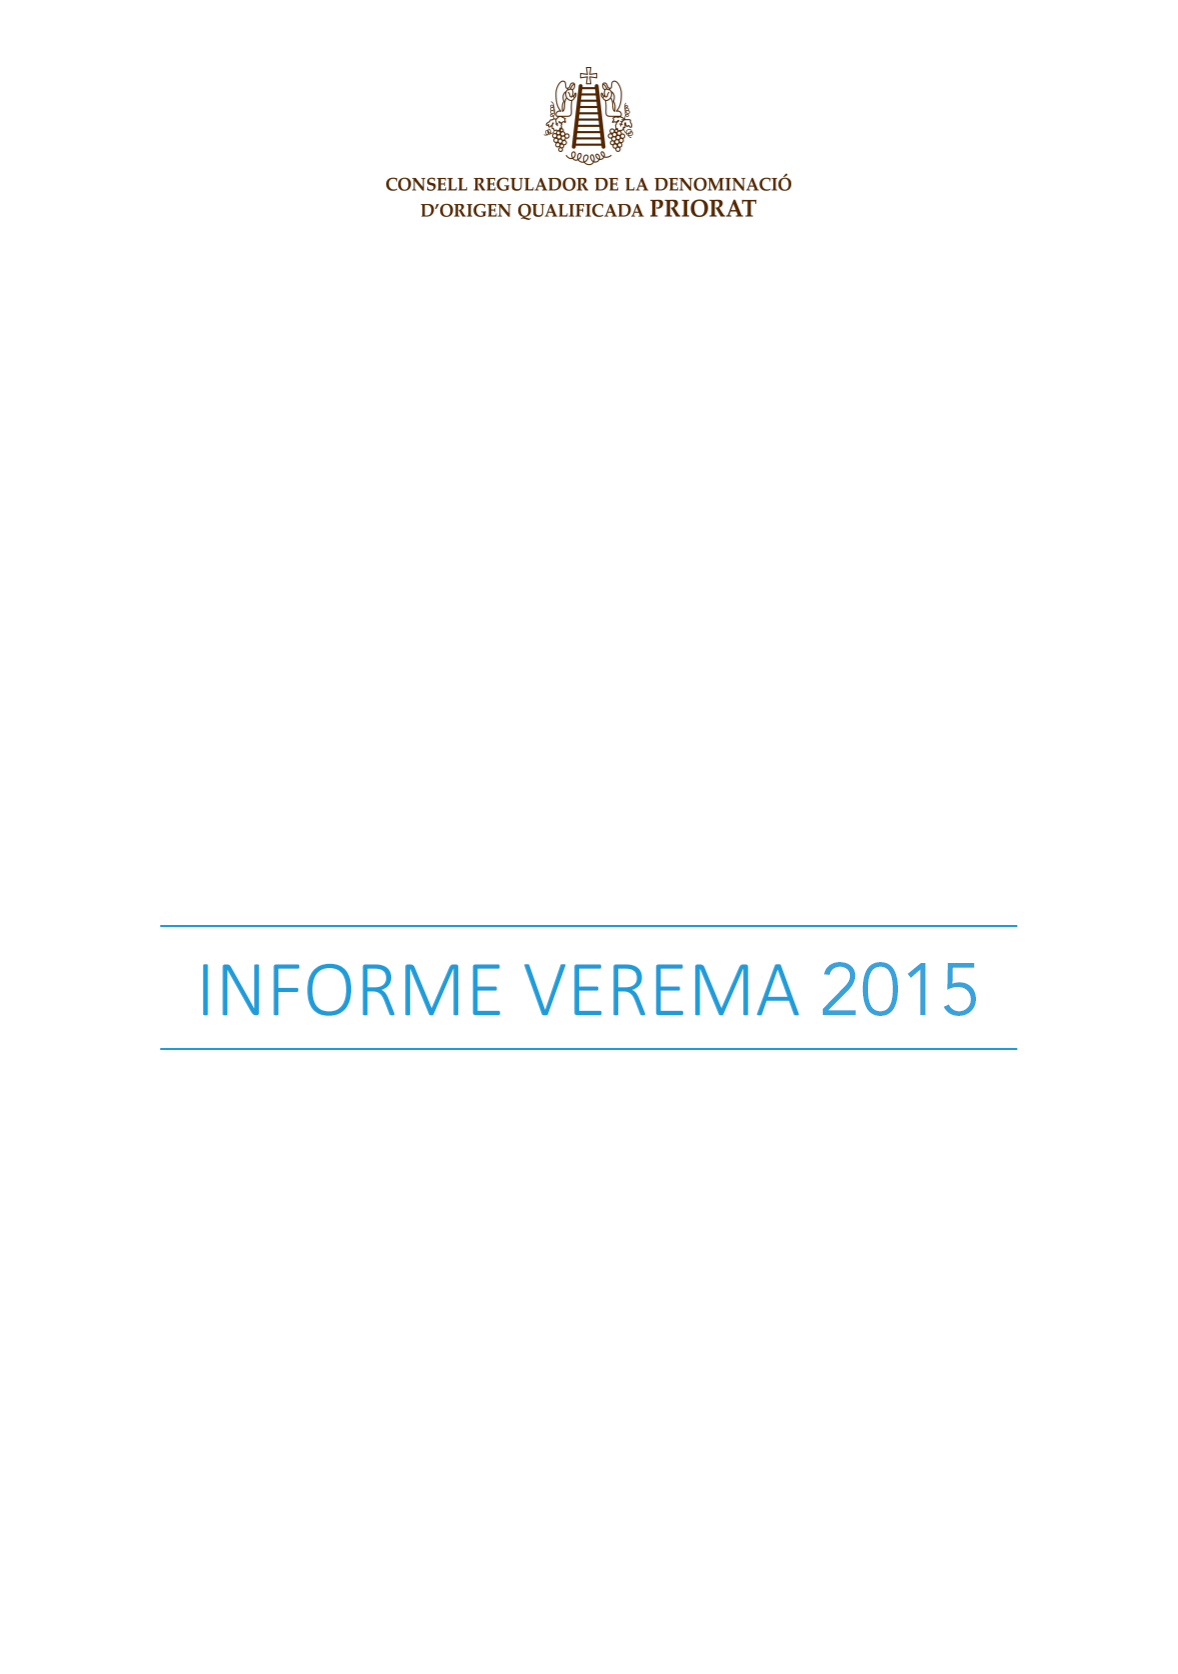 Informe de verema 2015